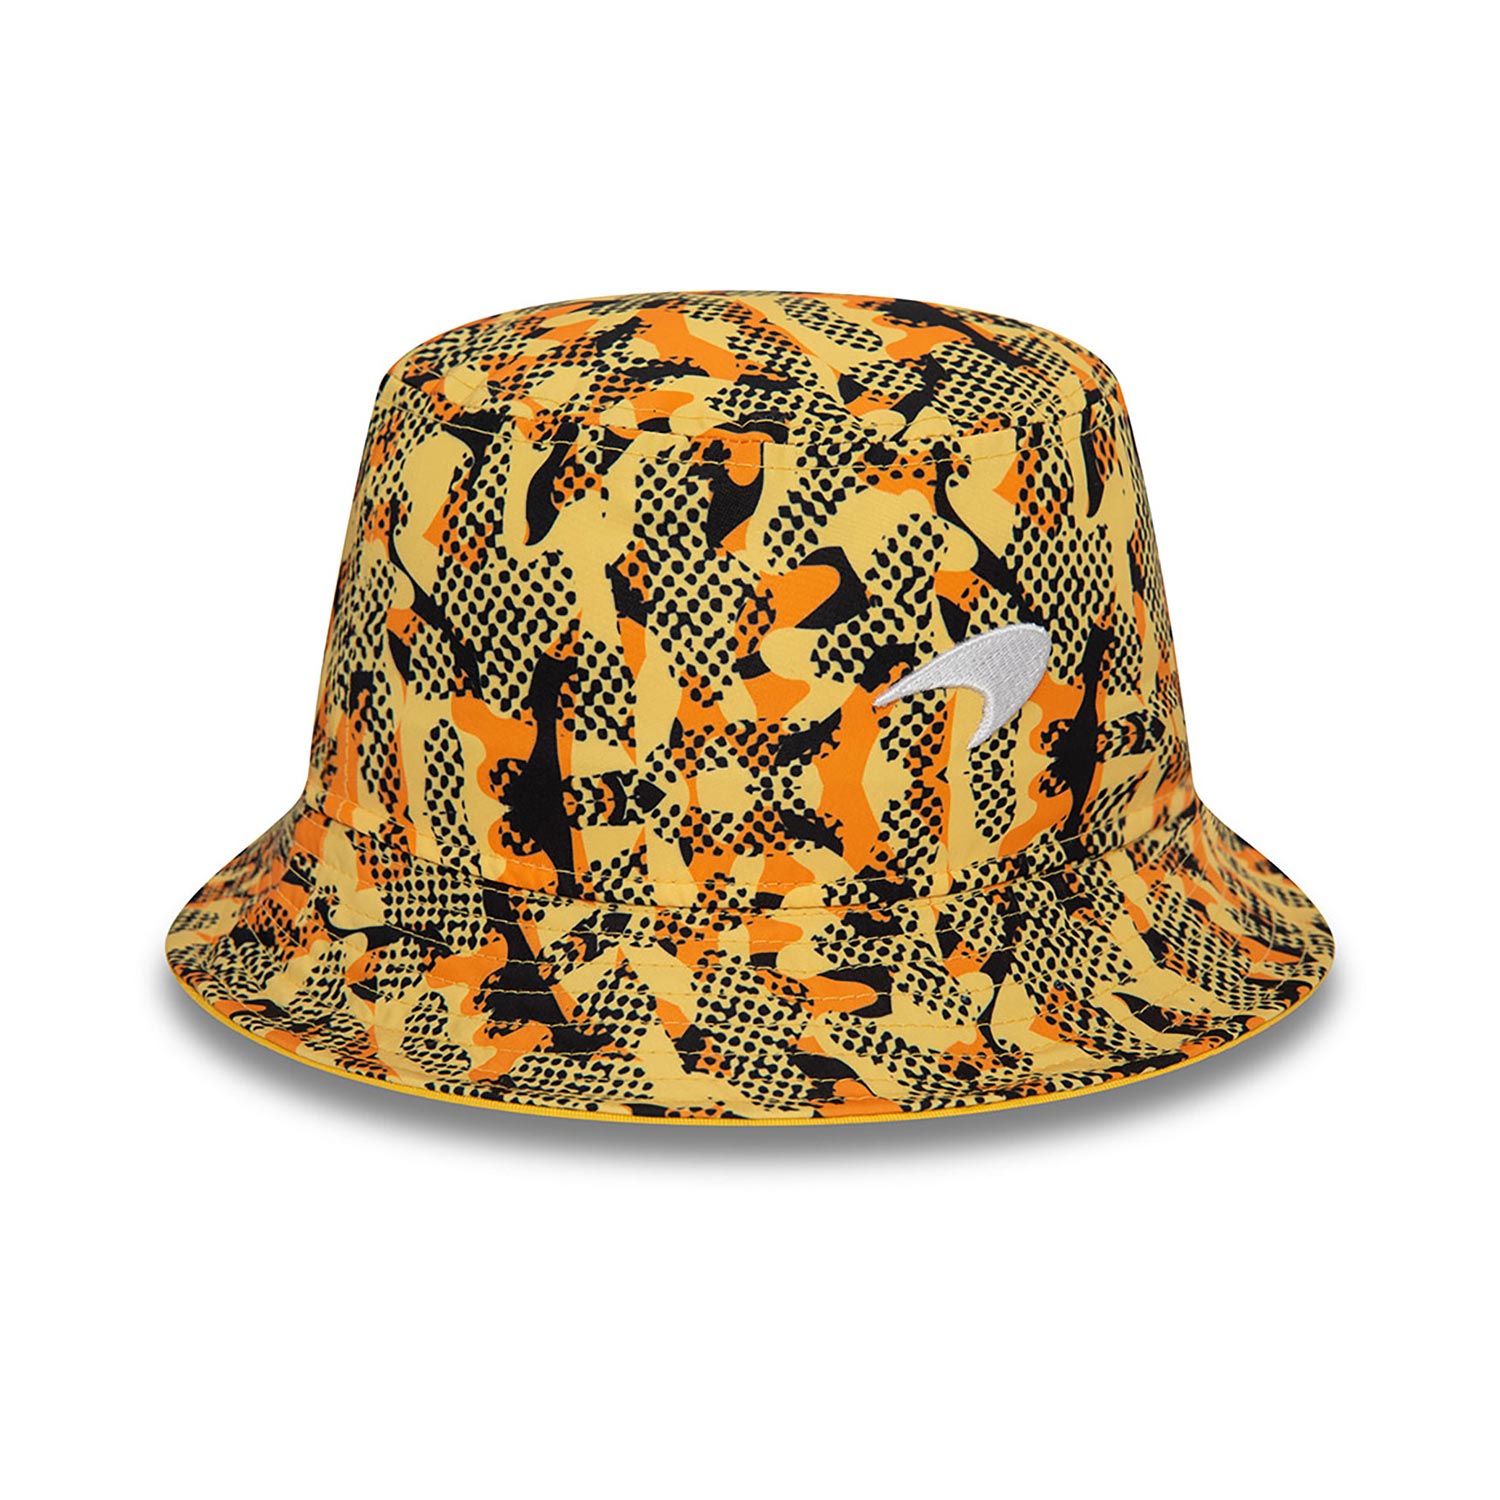 Men's New Era Gold McLaren F1 Team Camo Print Bucket Hat Size: Medium